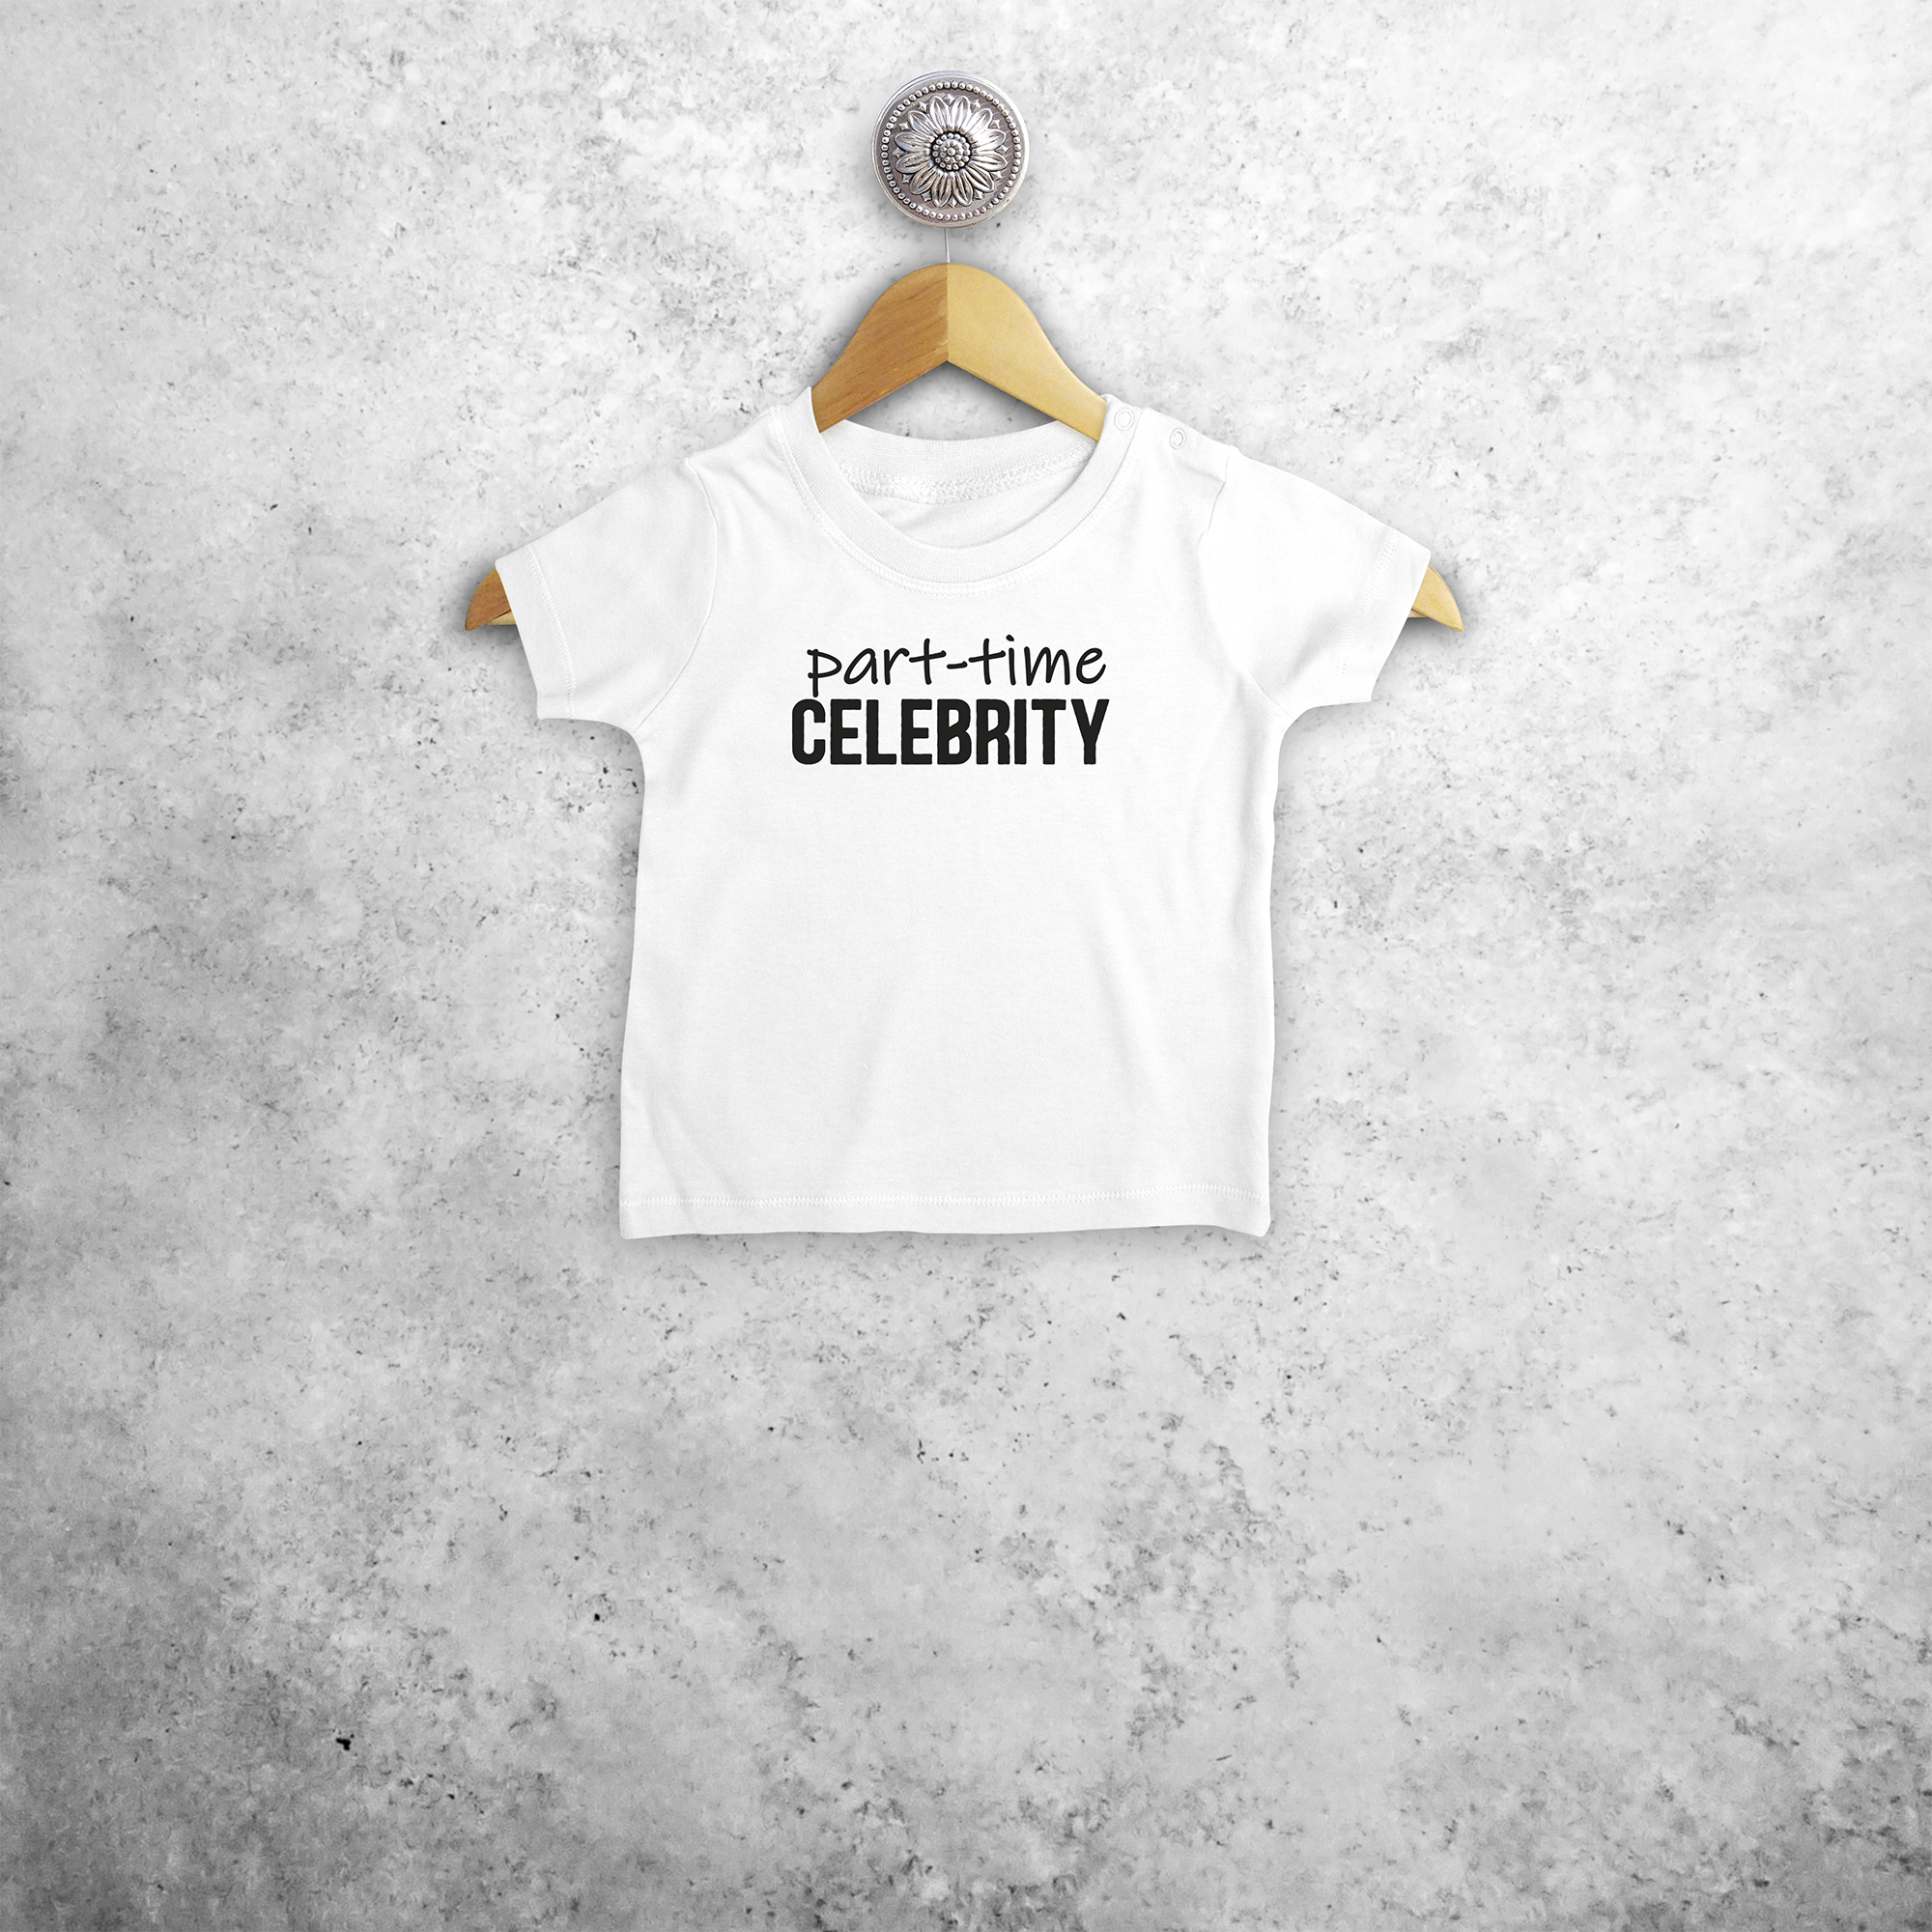 'Part-time celebrity' baby shortsleeve shirt